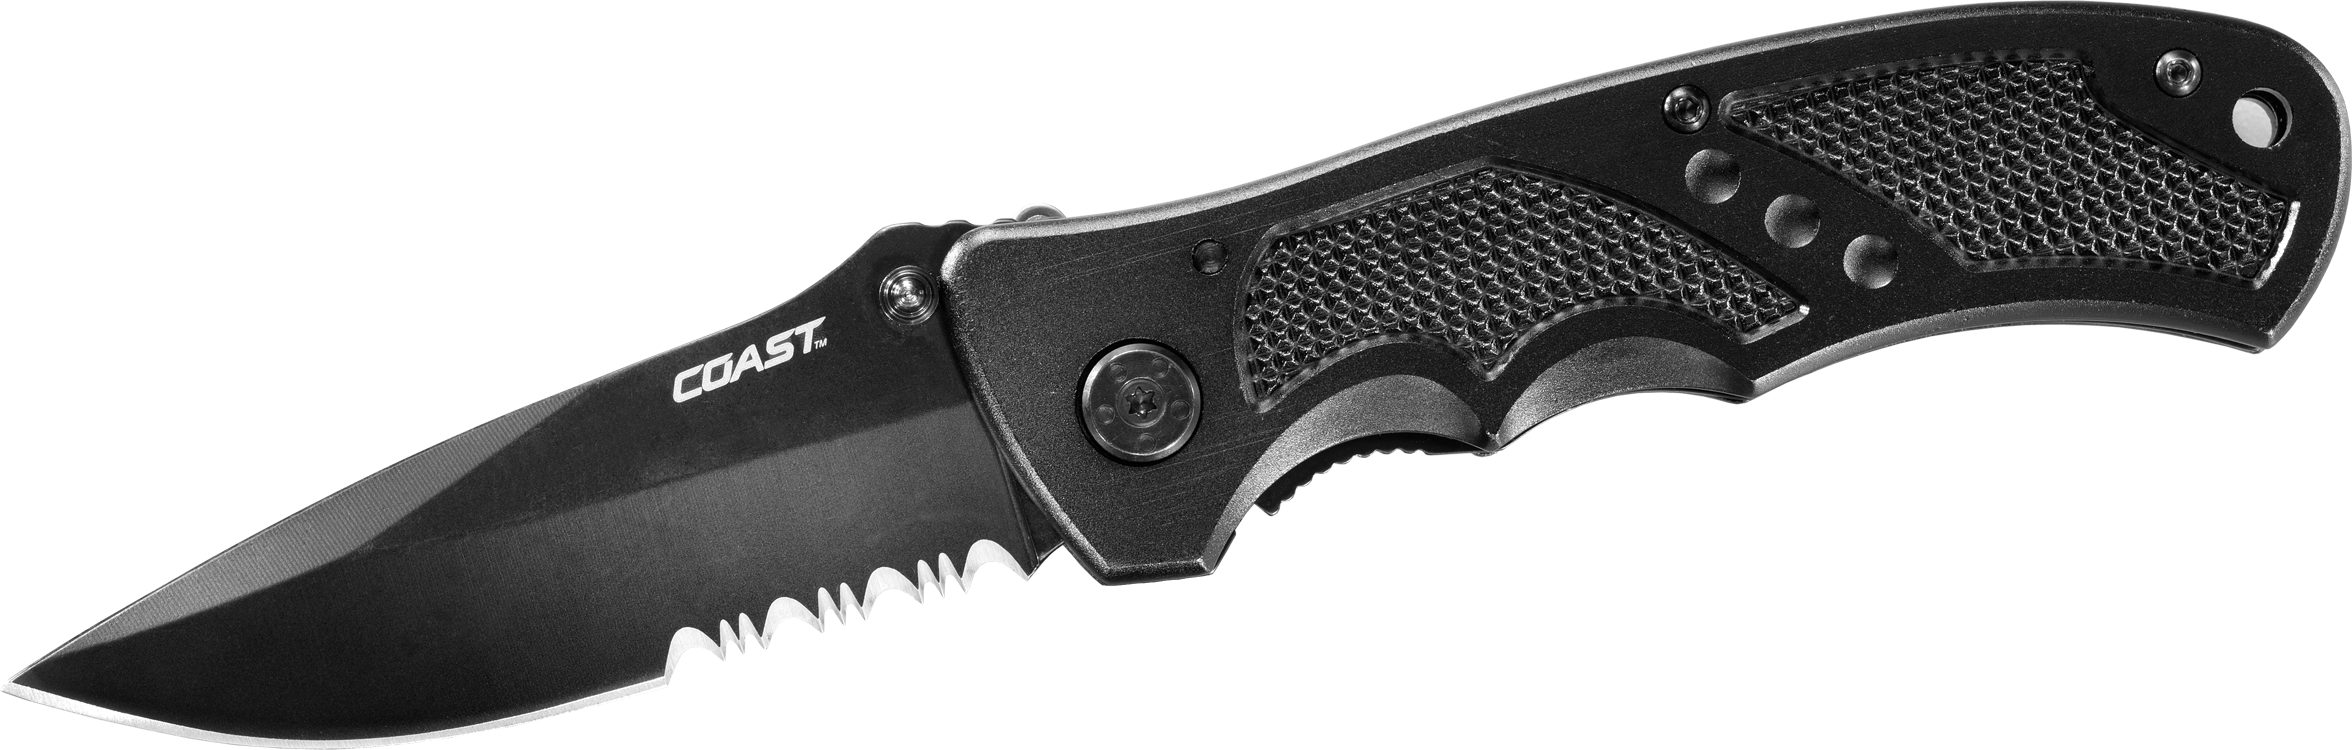 knife clipart serrated knife